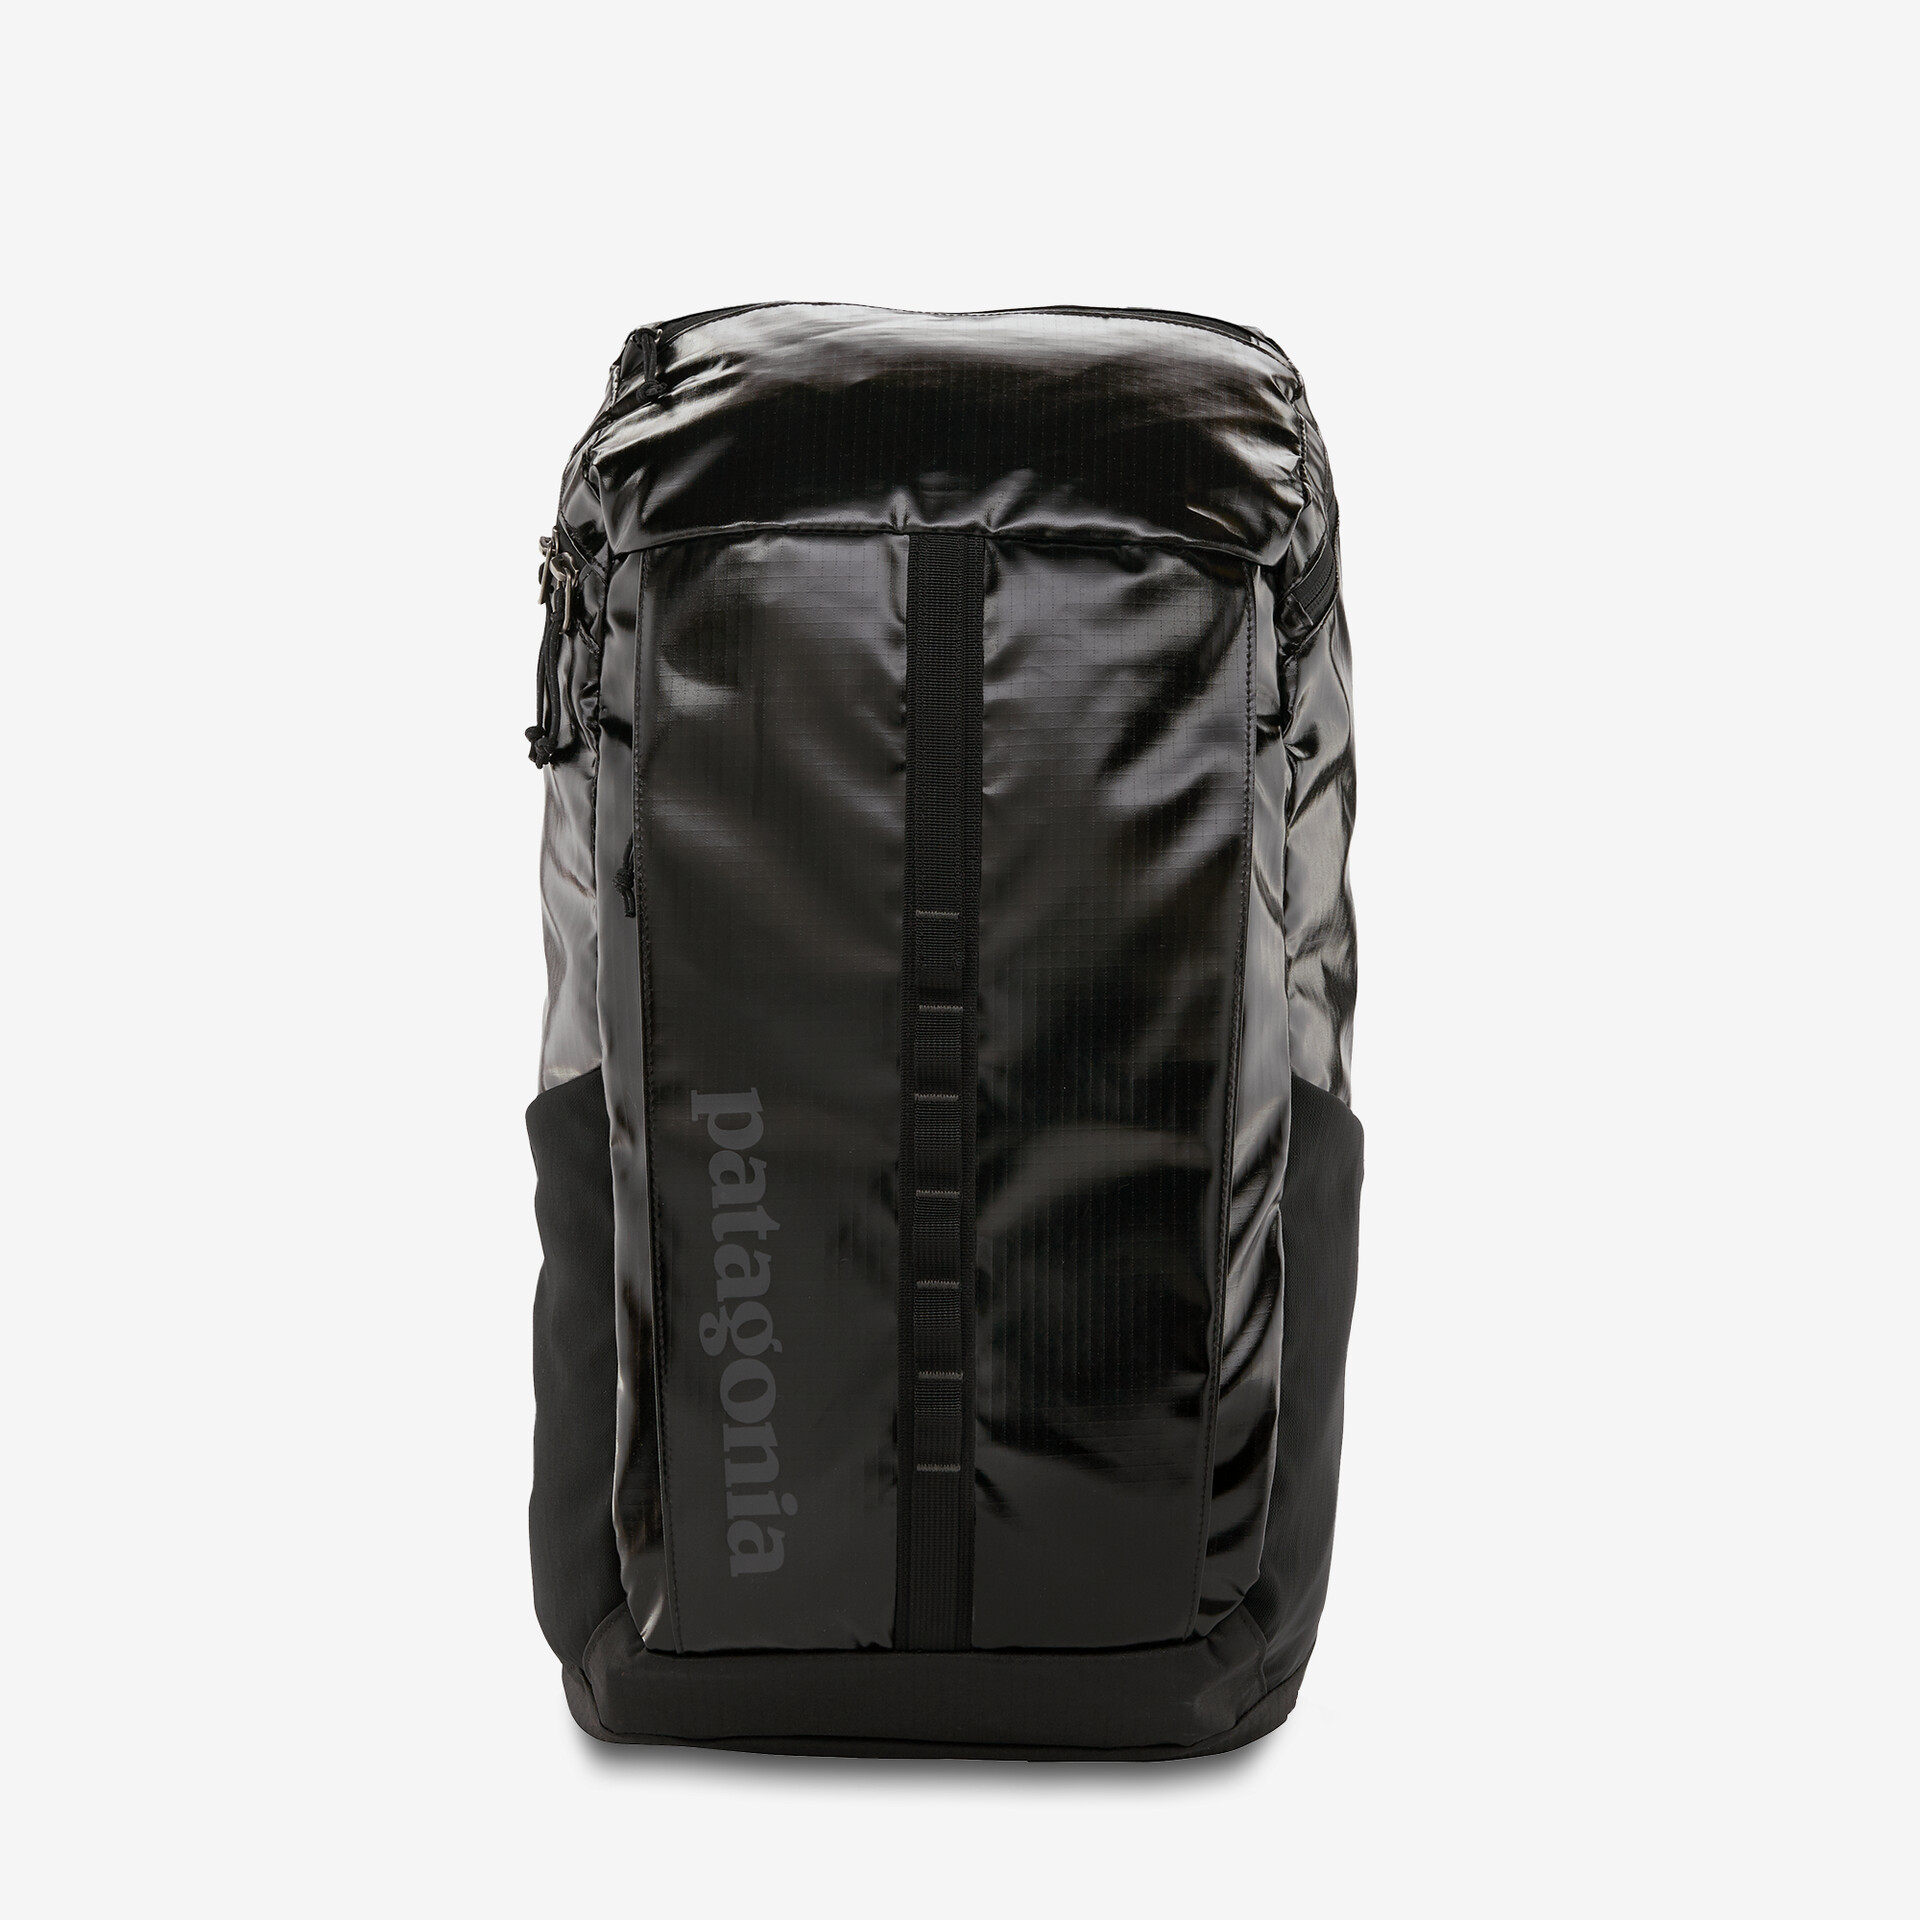 A burly 25-liter Black Hole daypack - Best Travel Backpacks